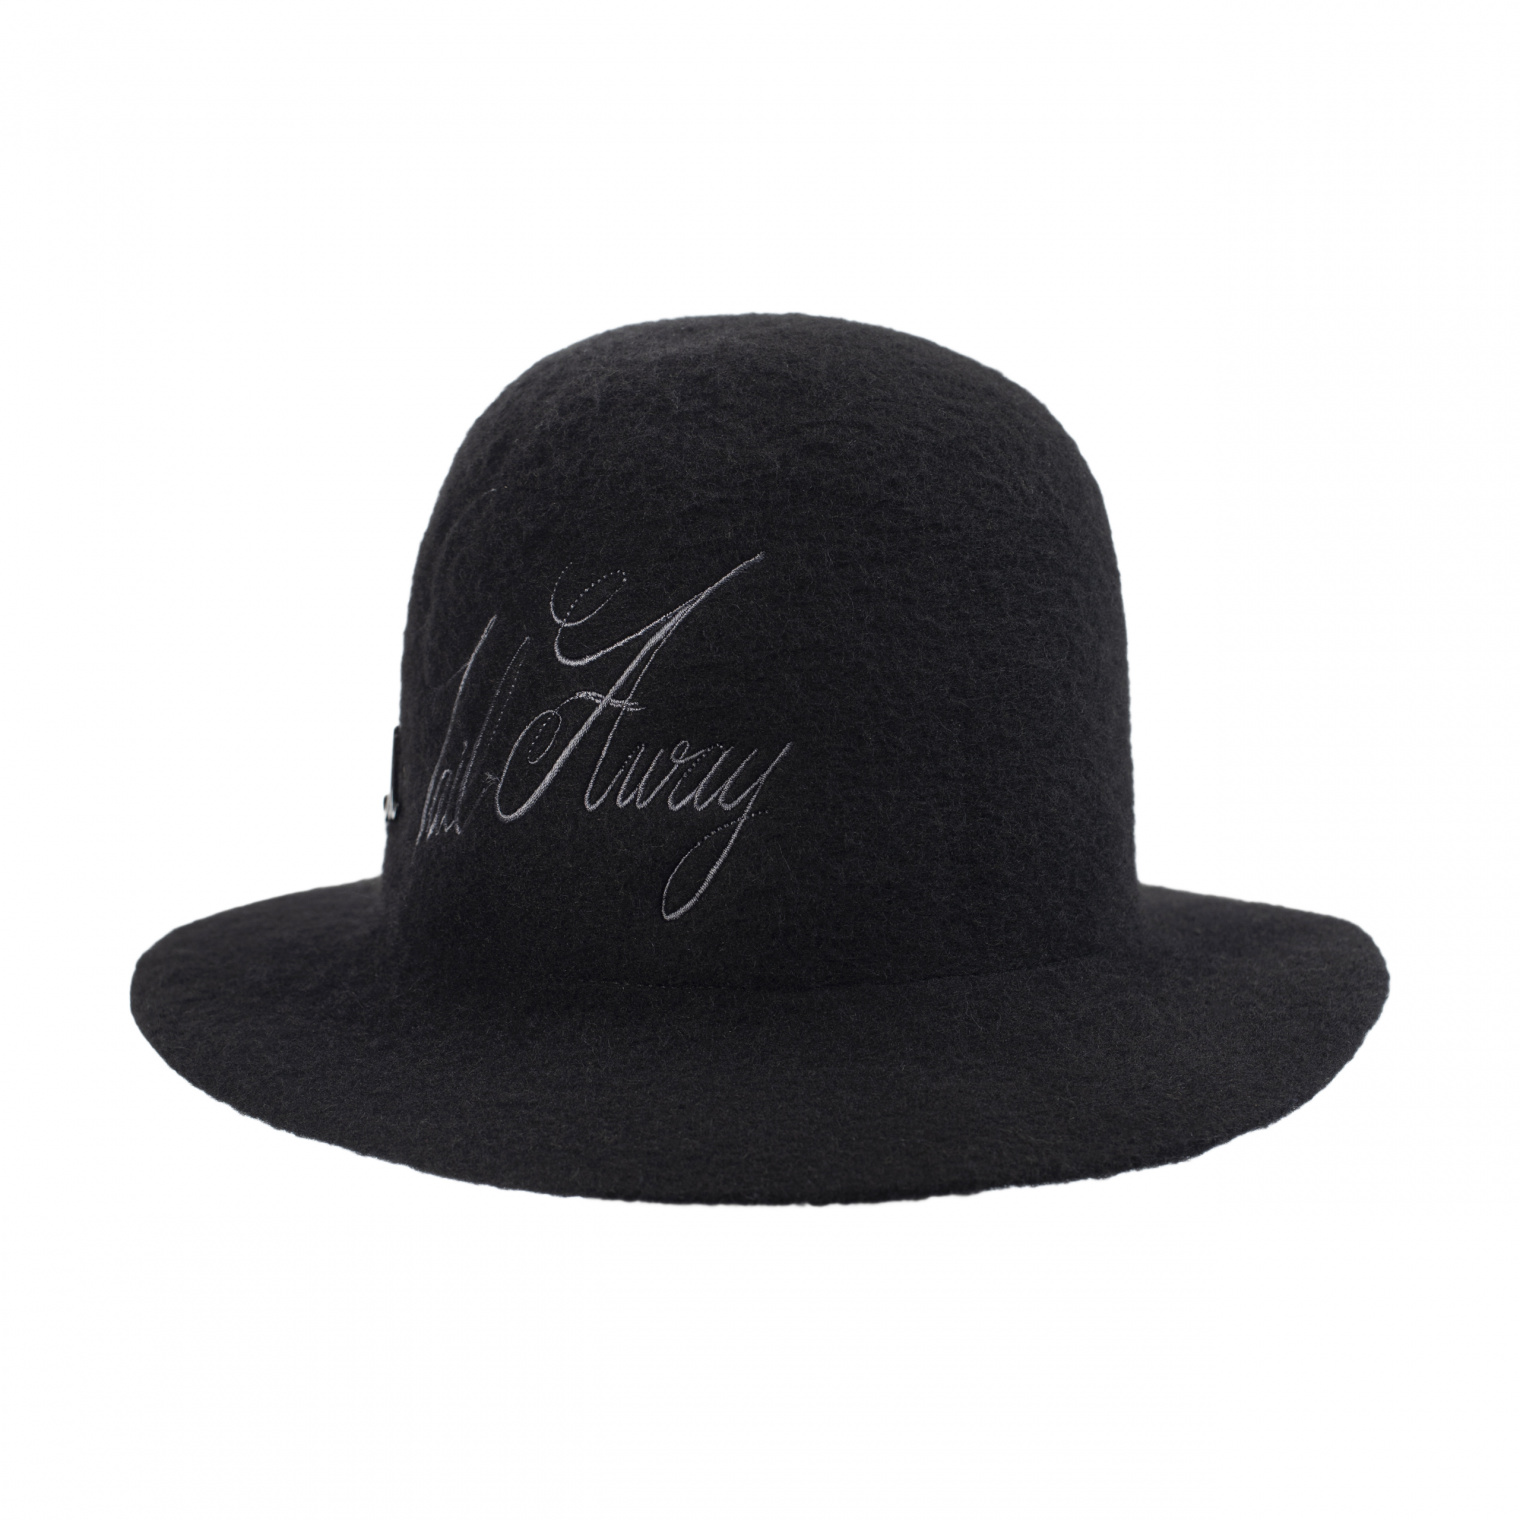 Junya Watanabe Embroidered logo hat in black